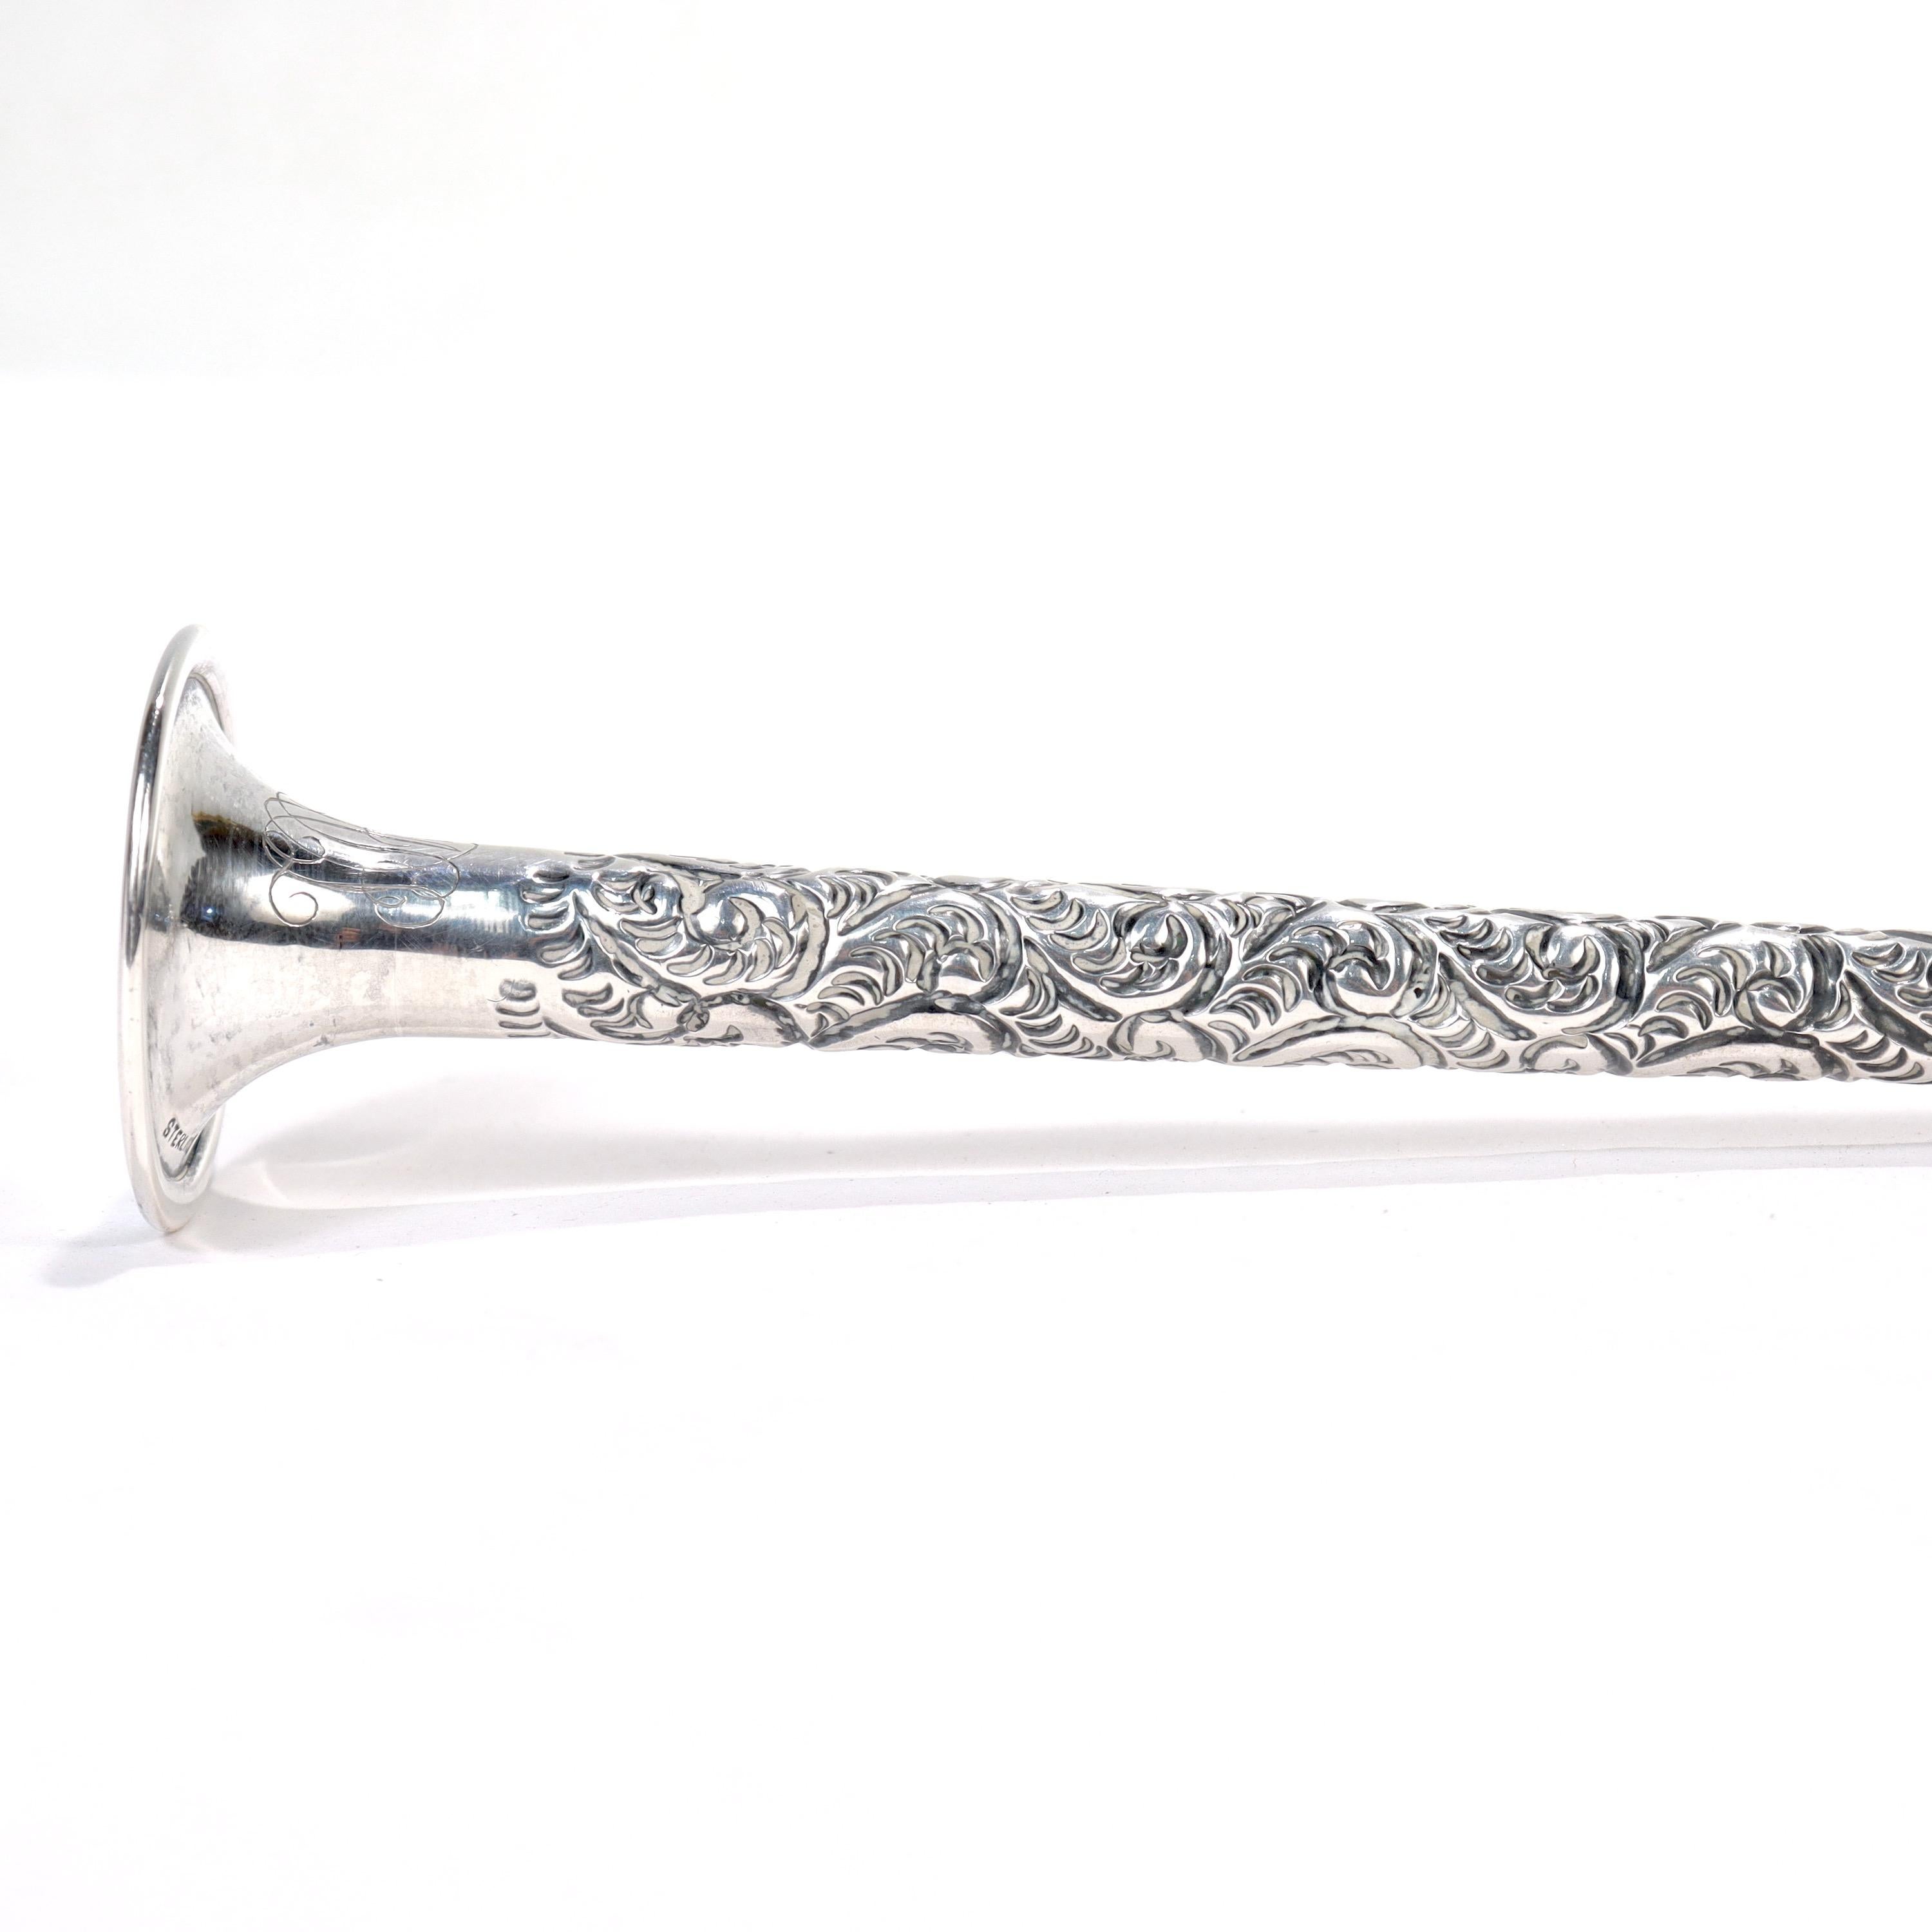 Antique Edwardian Repousse Sterling Silver Ear Trumpet or Horn 1